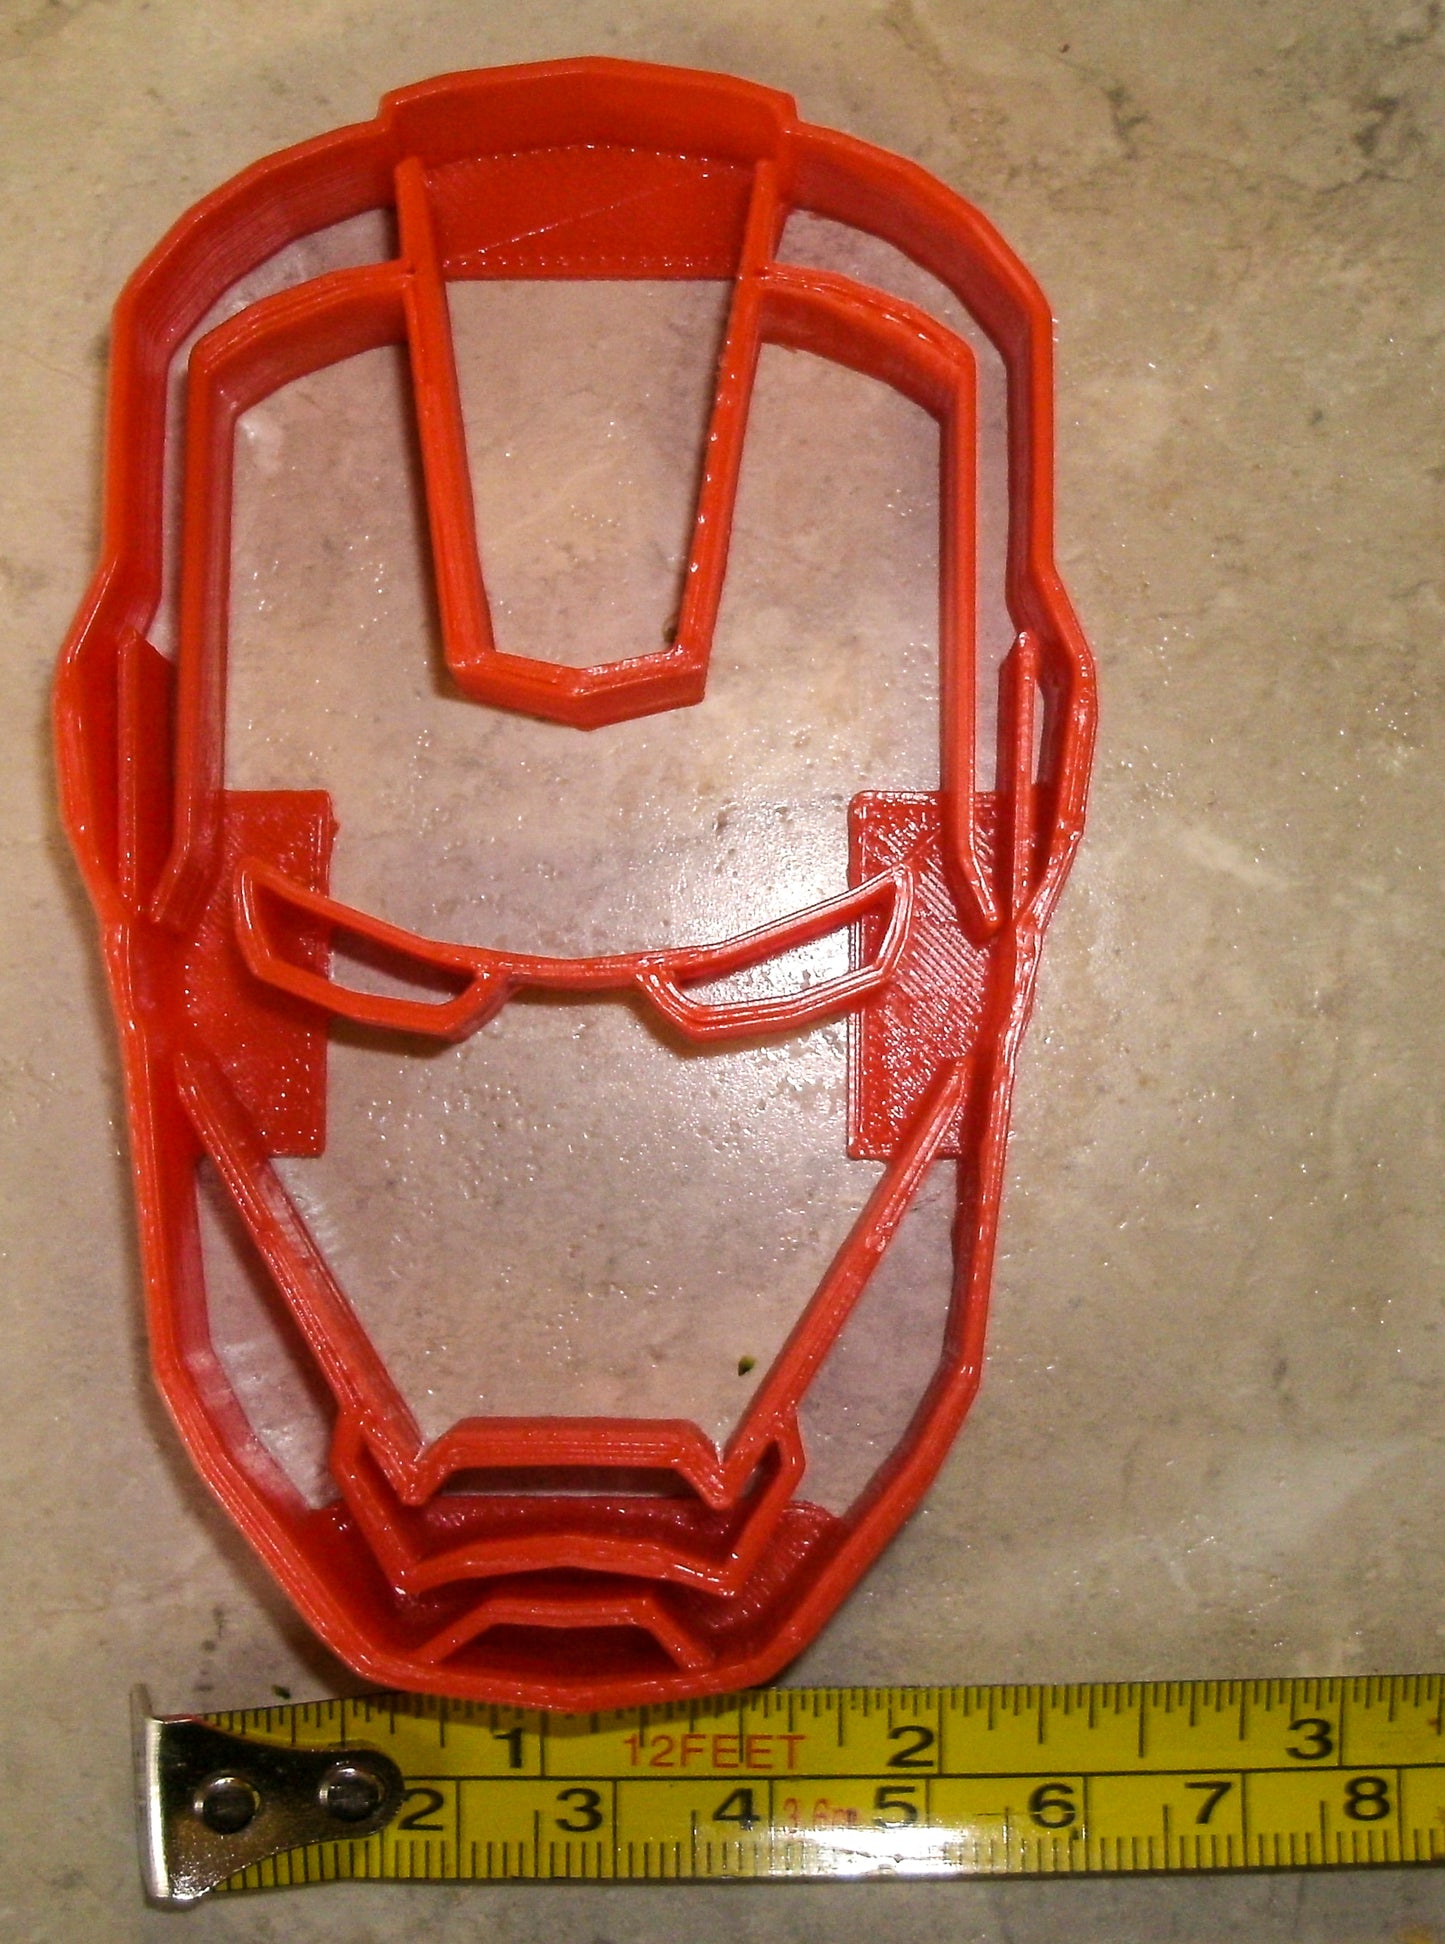 Iron Man Superhero Face Helmet Marvel Character Cookie Cutter Made in USA PR467